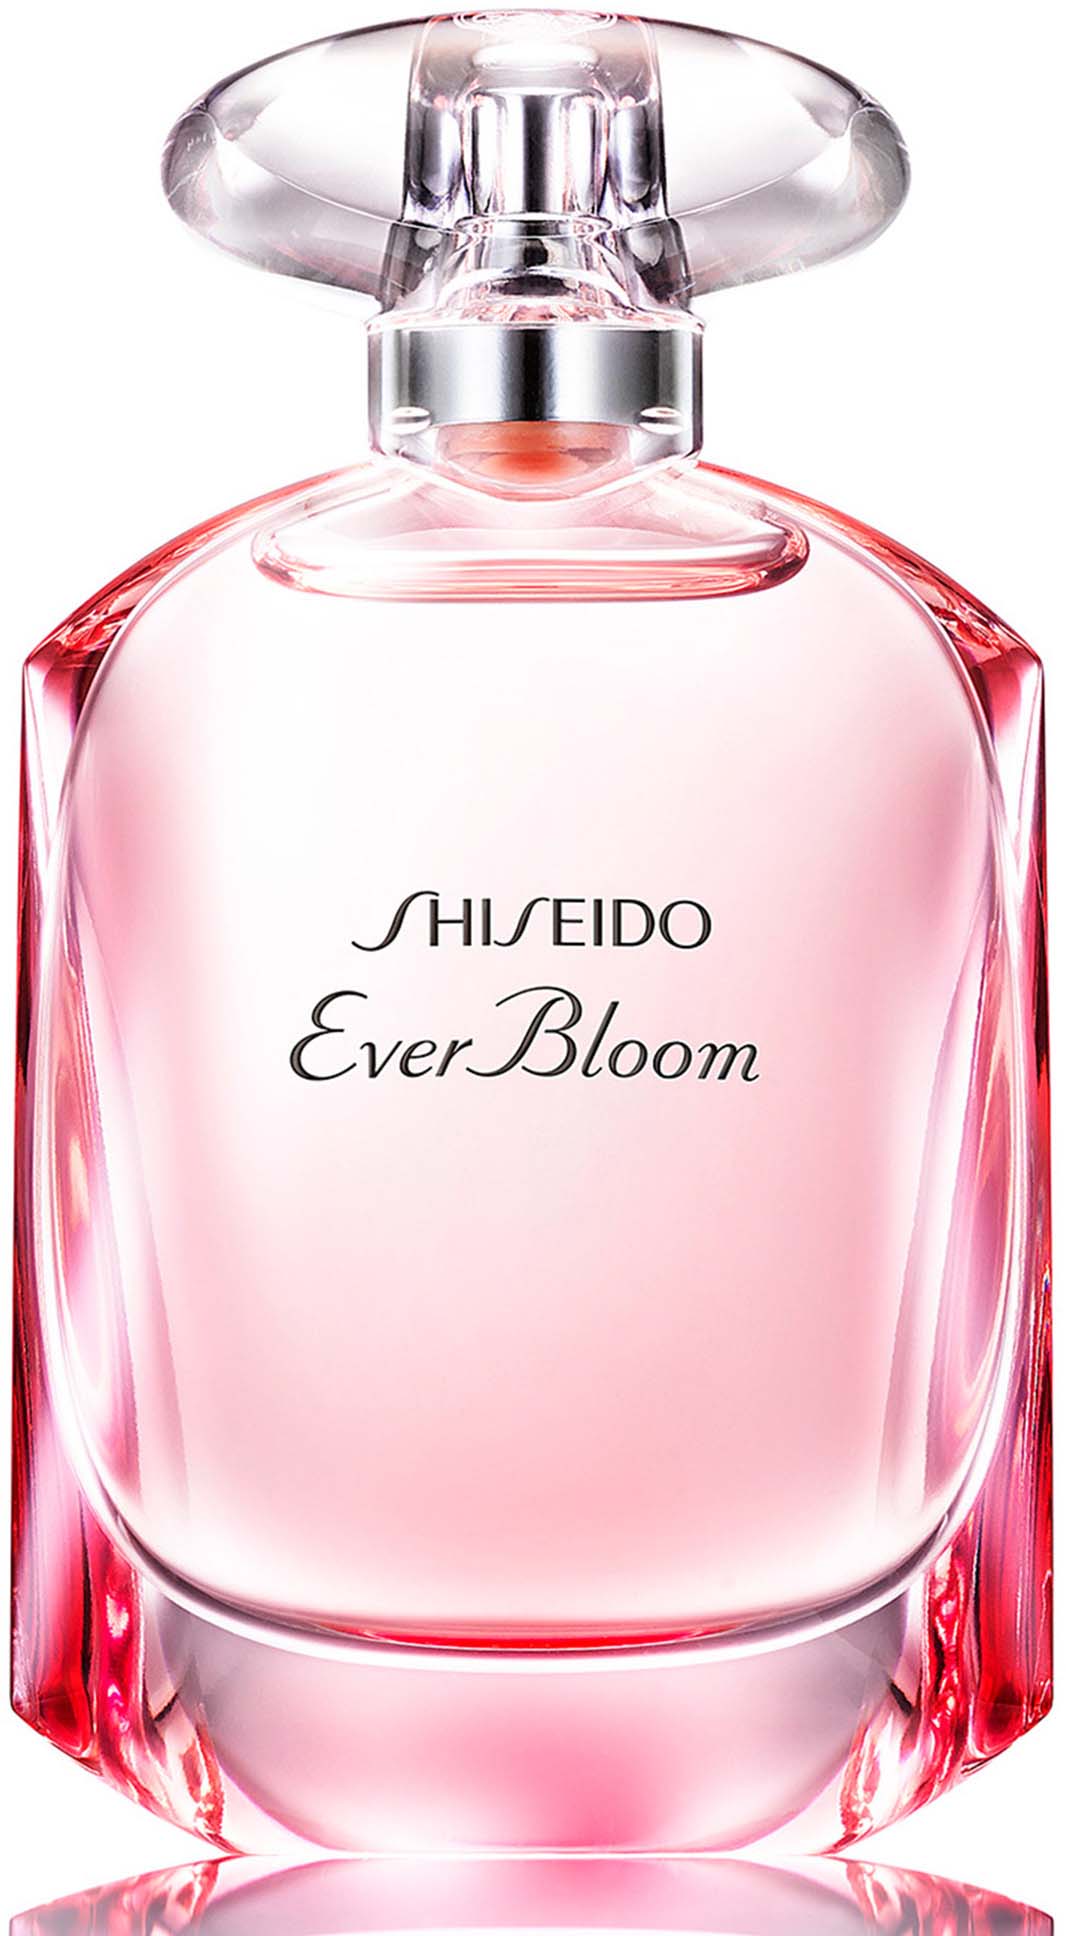 shiseido ever bloom 30 ml